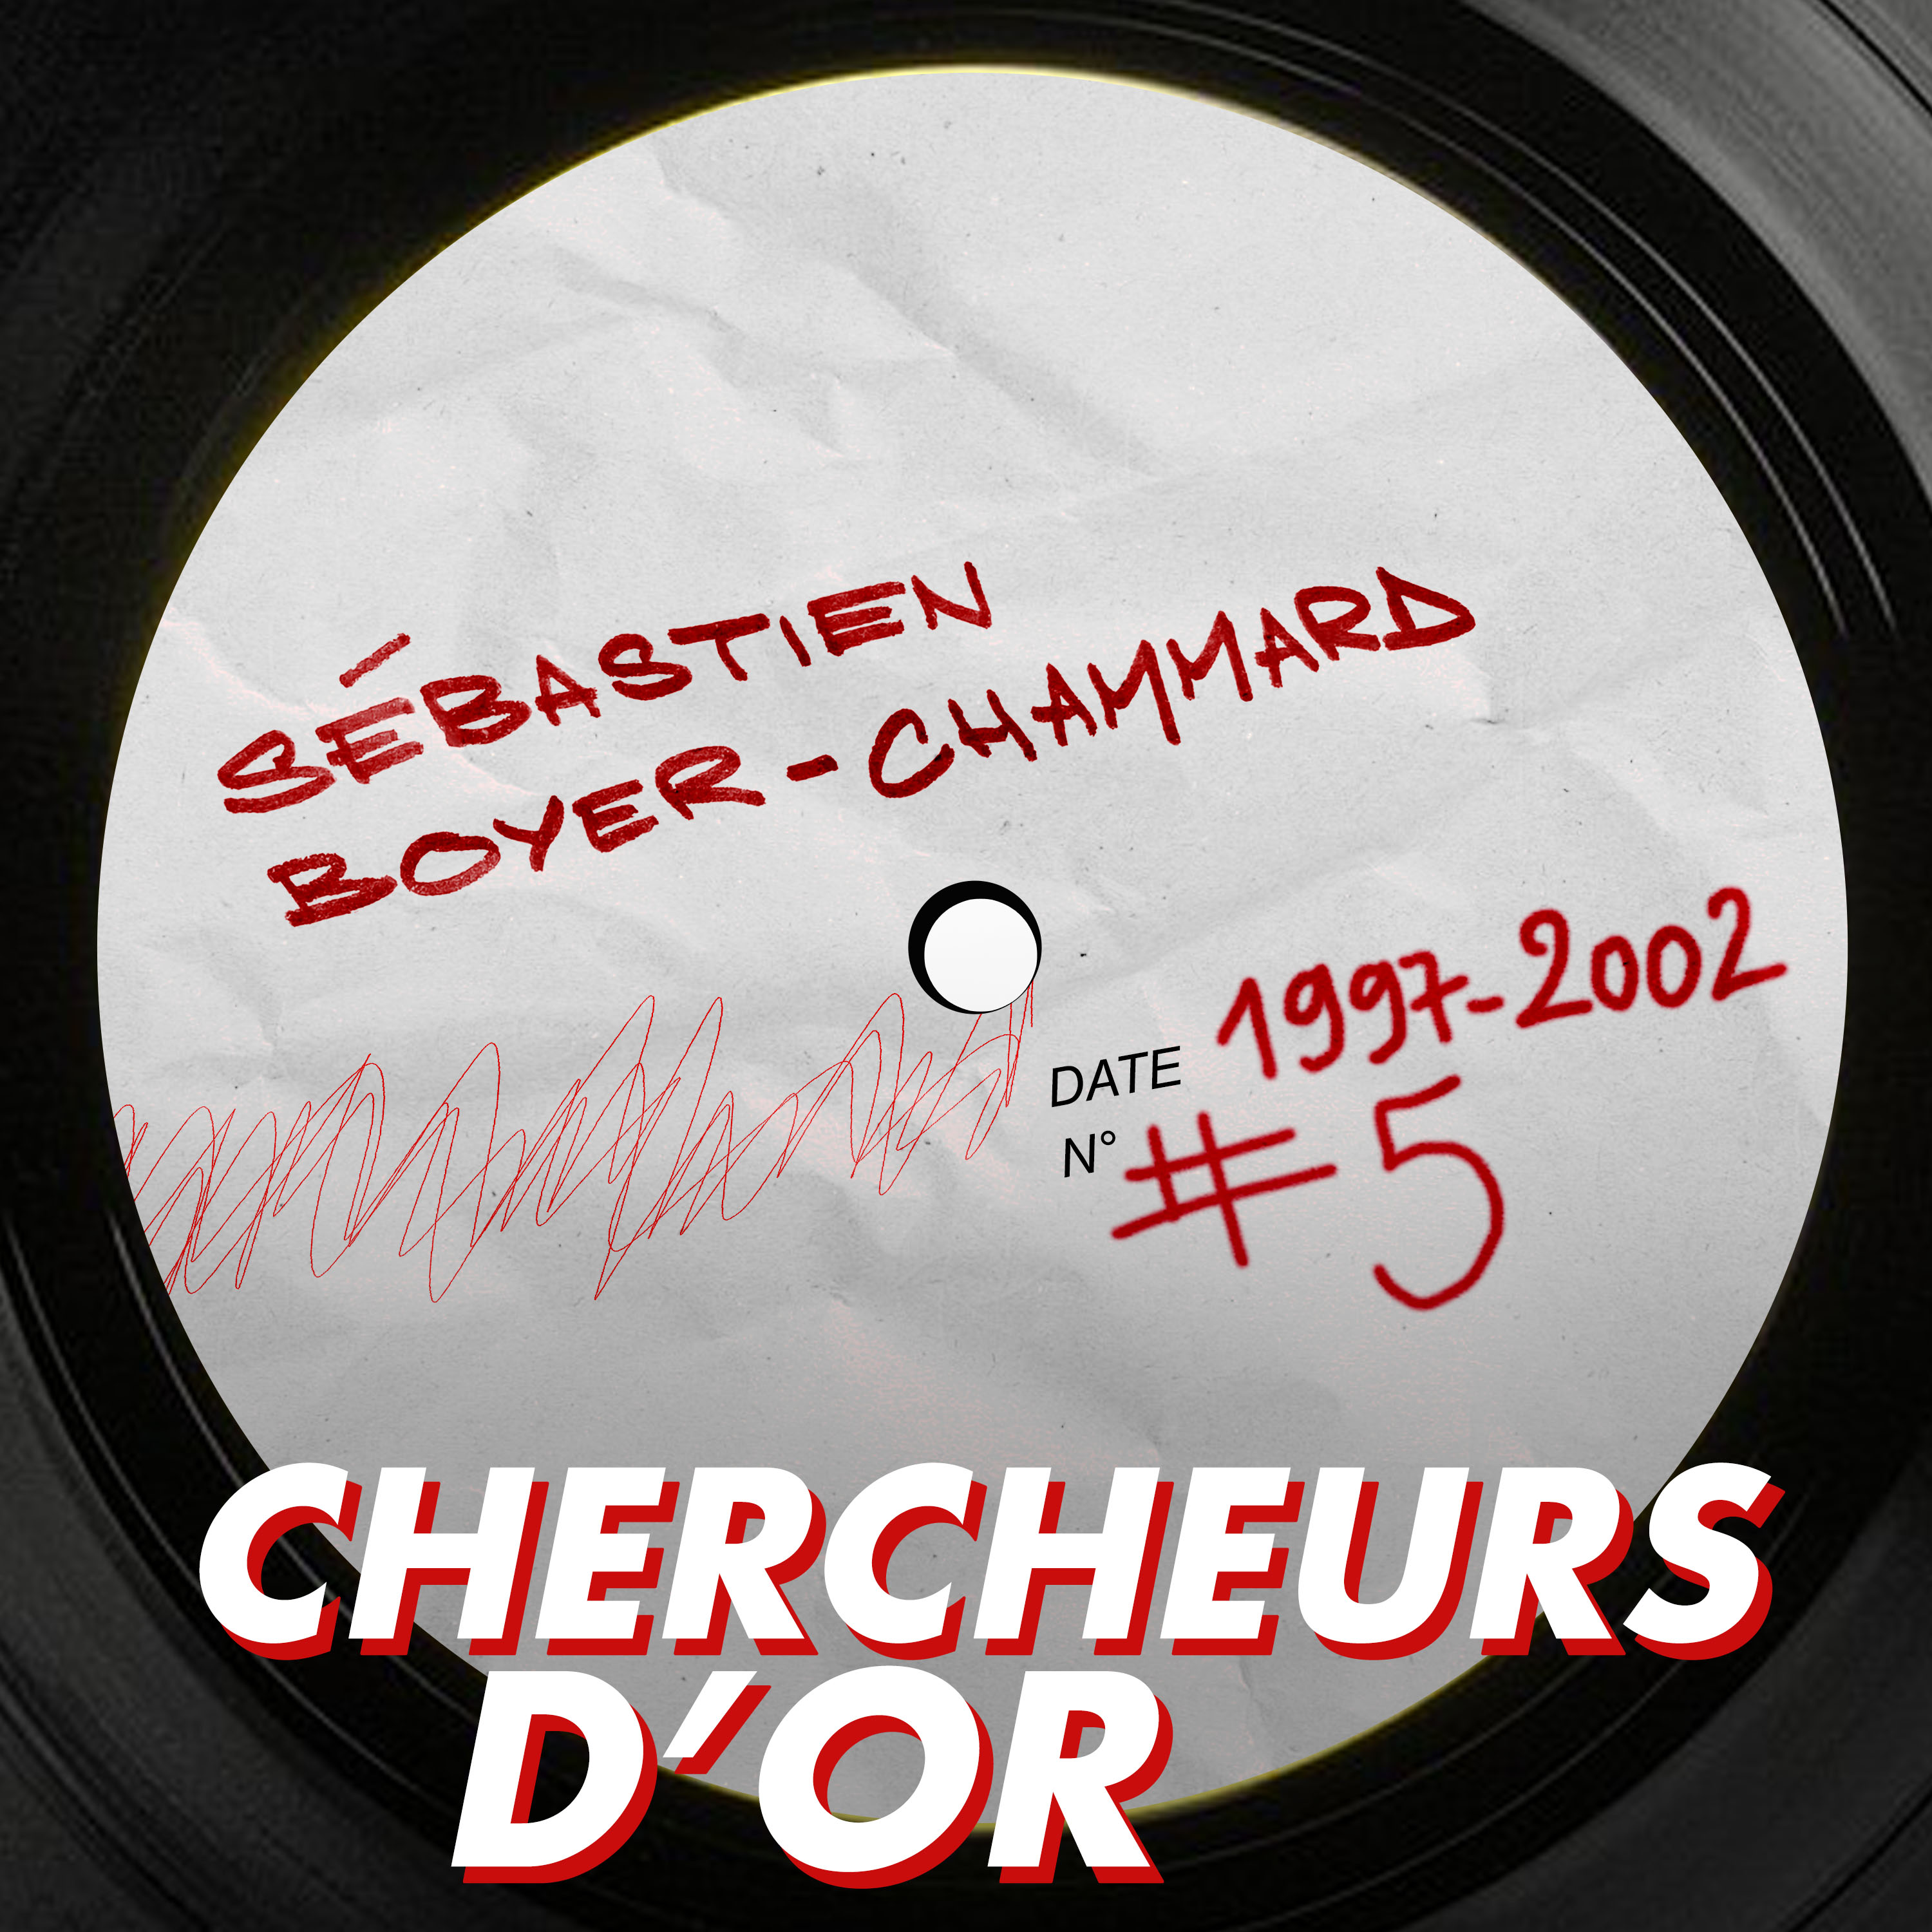 Chercheurs d’or, épisode 5 — Sébastien Boyer Chammard